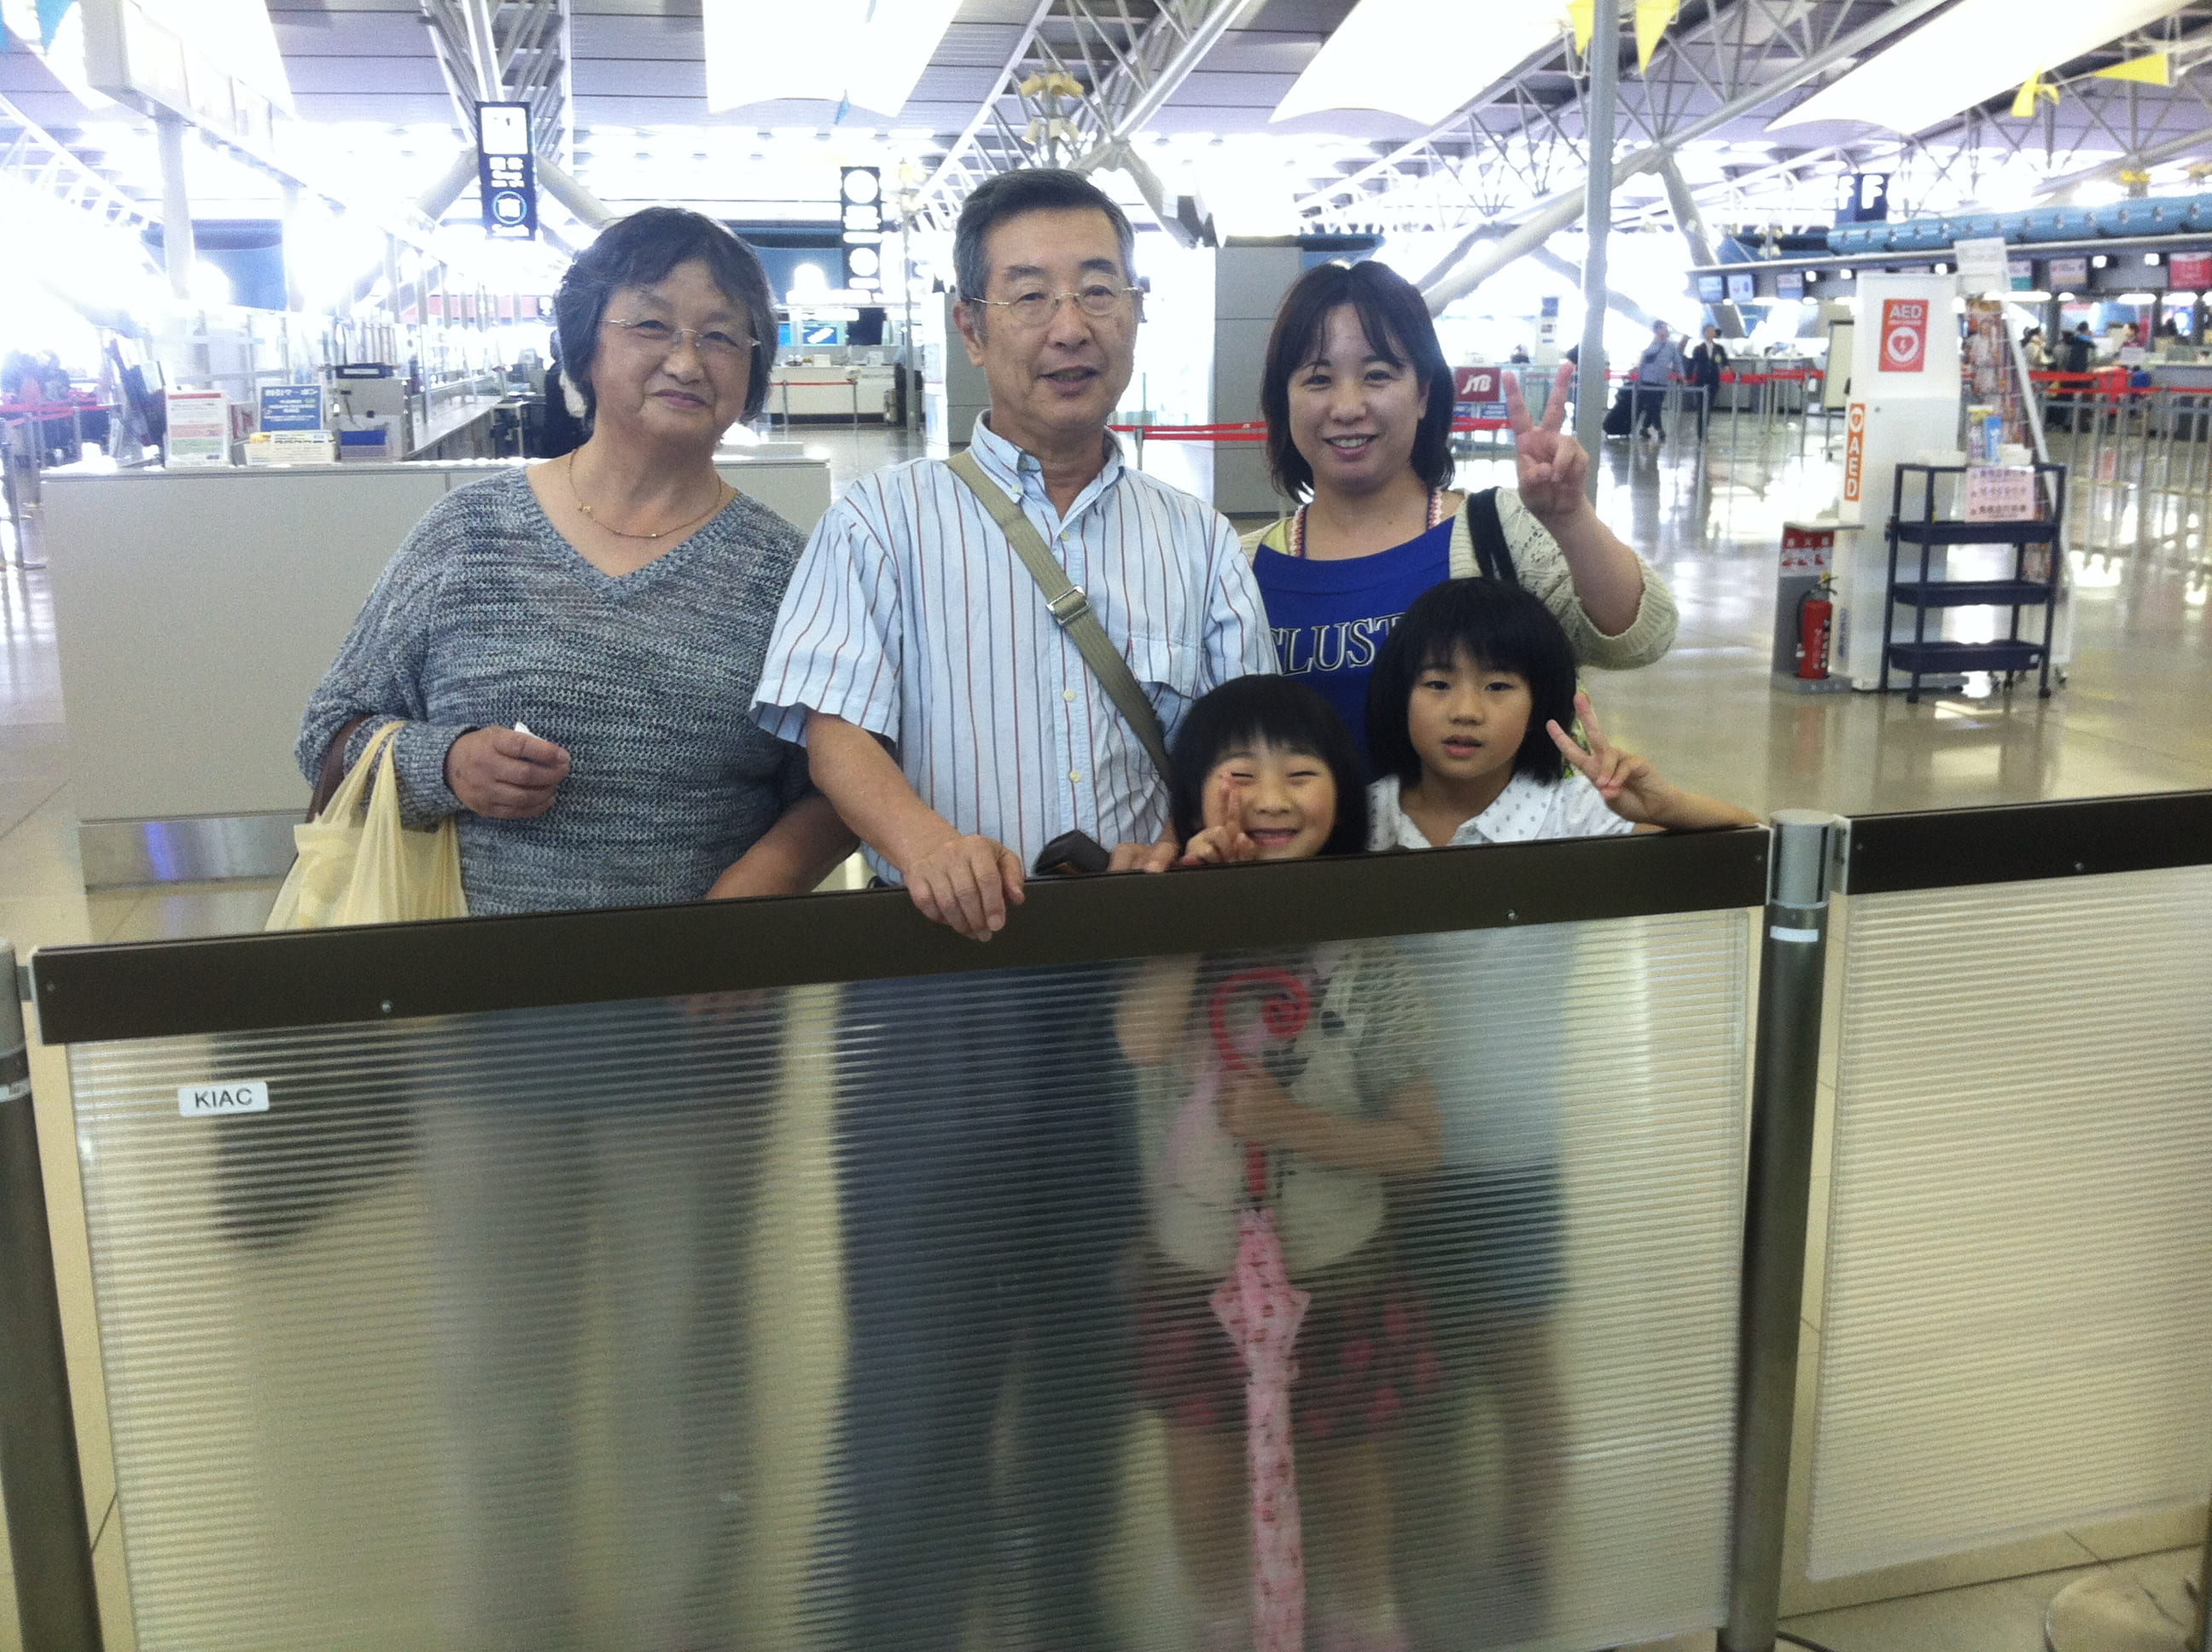 Host family saying goodbye at airport